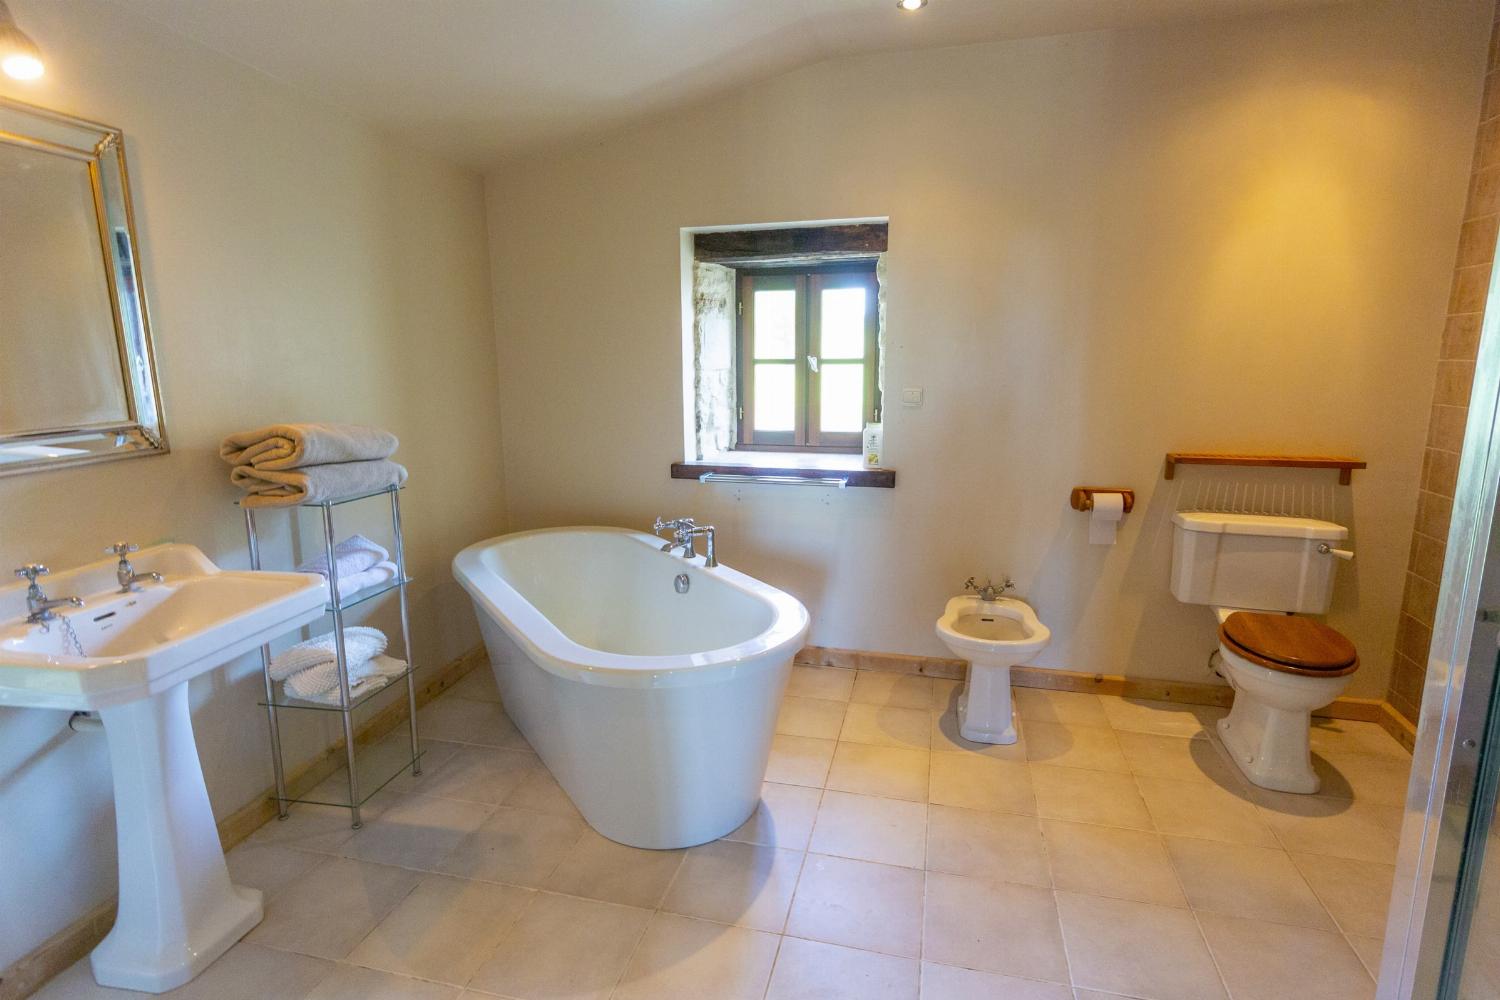 Salle de bain | Location de vacances en Charente